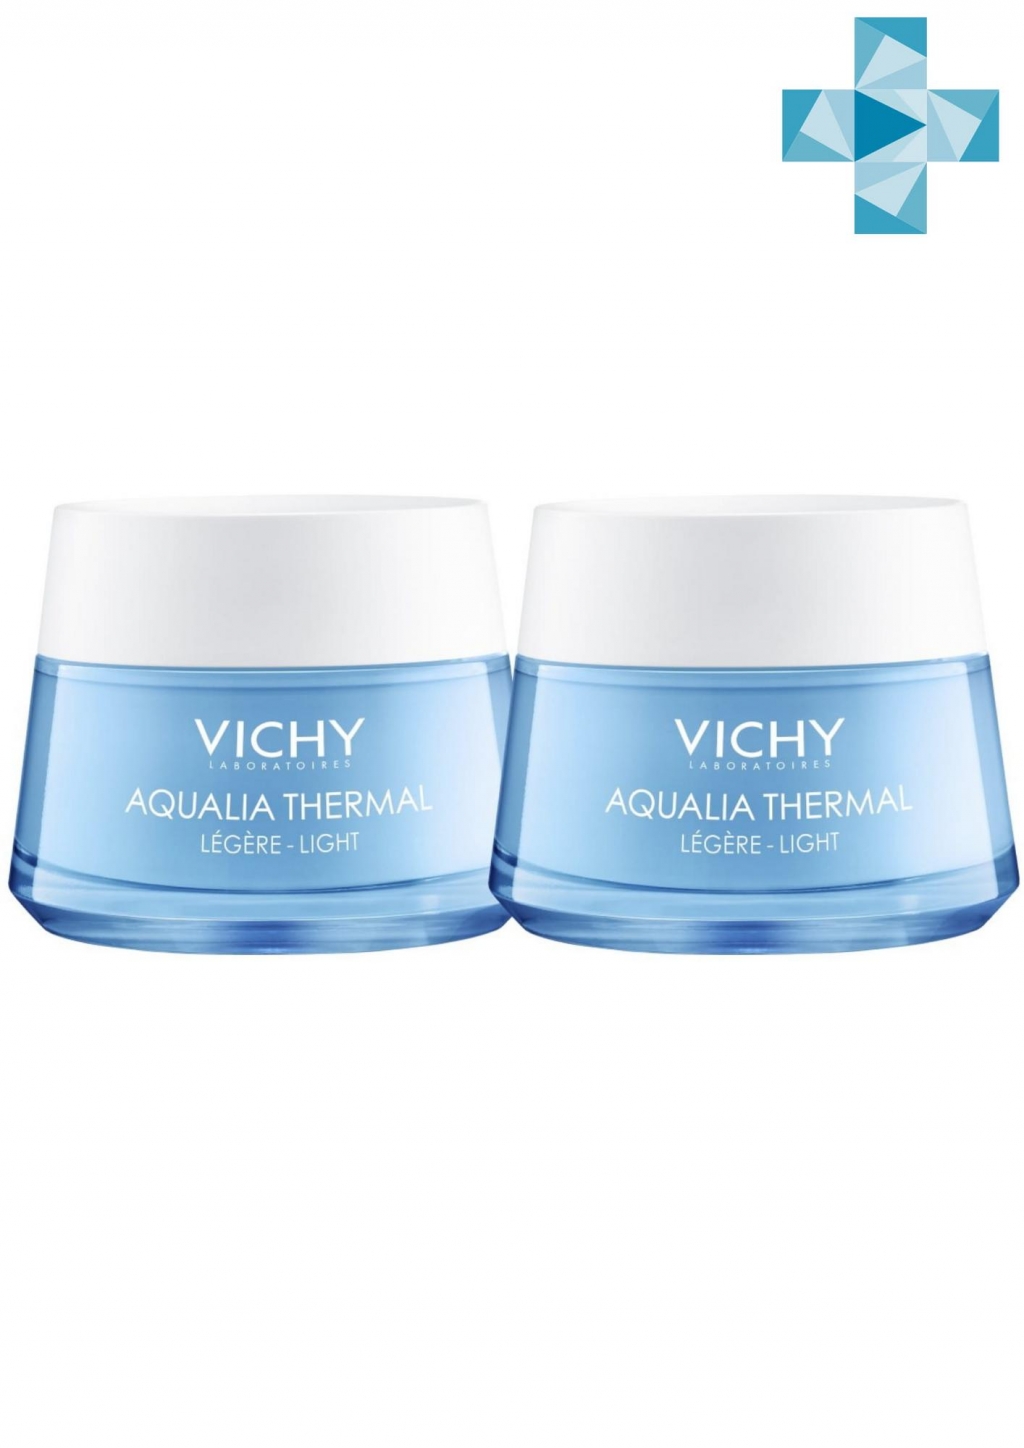 Vichy Комплект Aqualia Thermal Legere Легкий крем для нормальной кожи, 2*50 мл (Vichy, Aqualia Thermal)